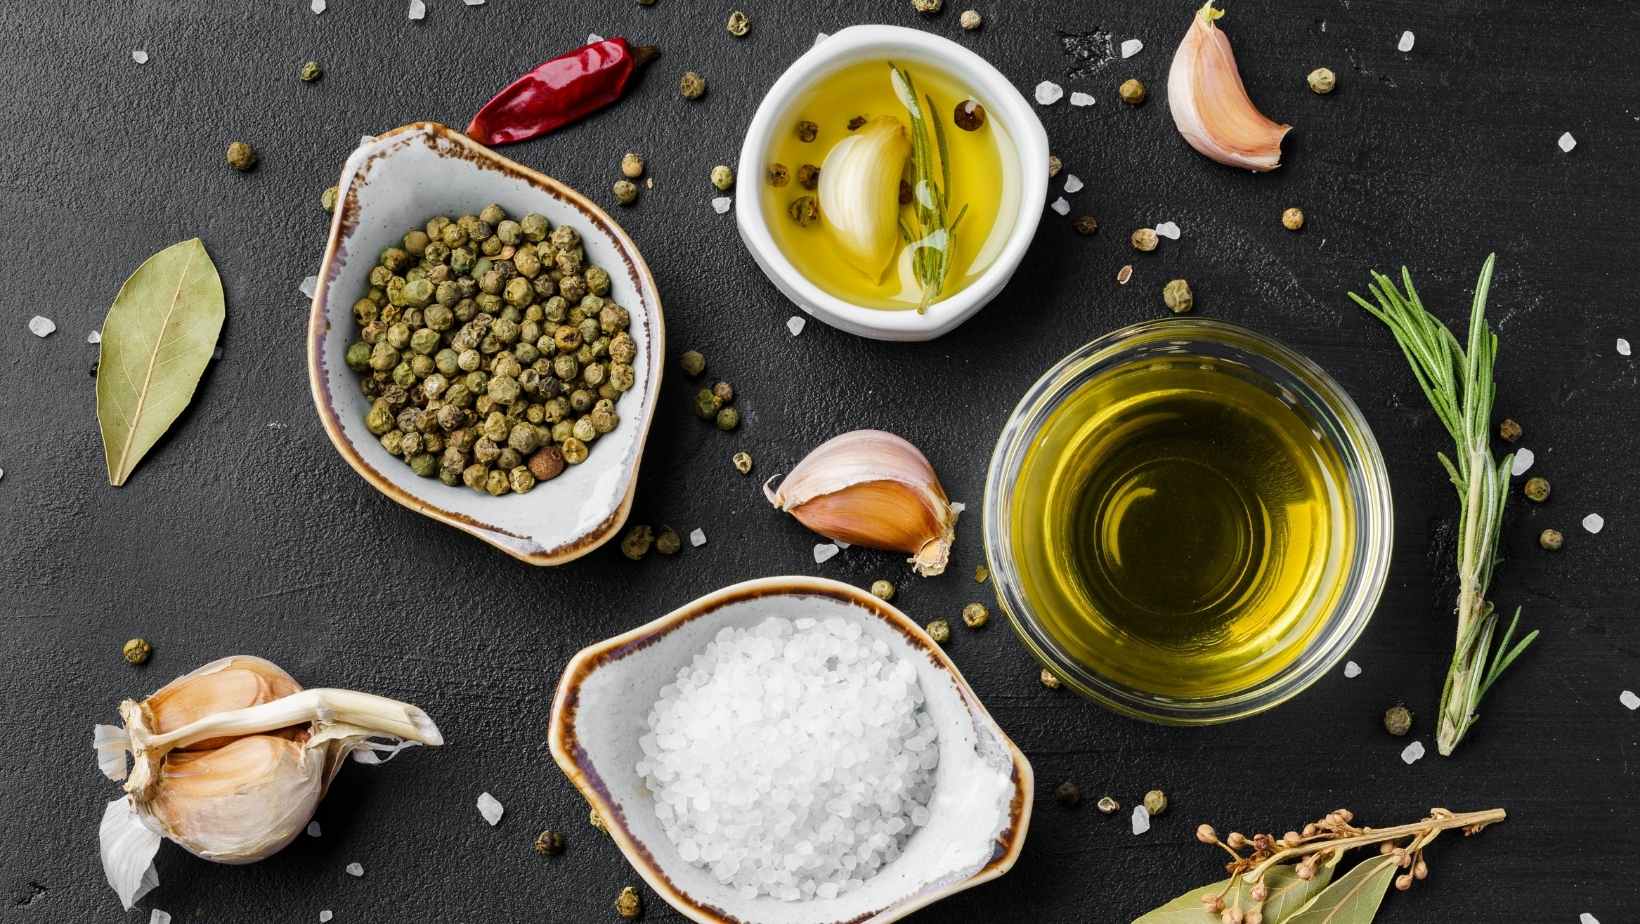 OK Olive oil tasting & food pairing at your villa - taste of crete